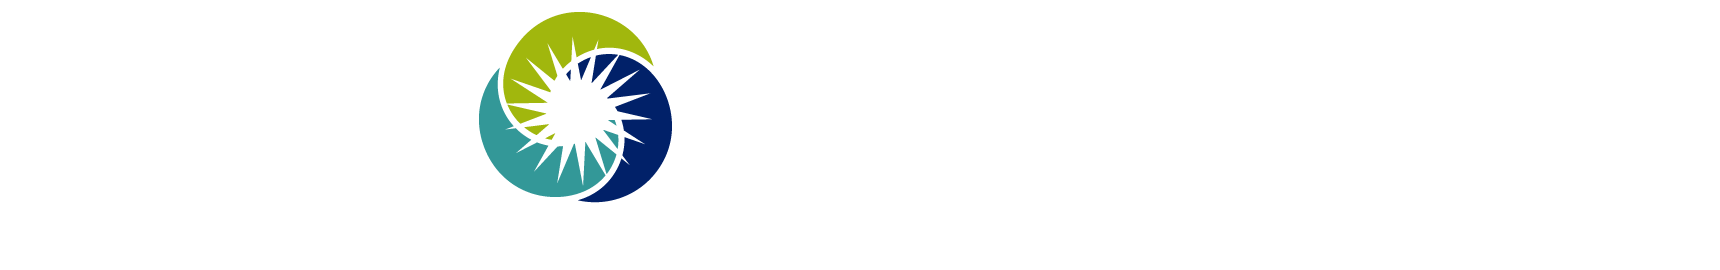 Nicholas Institute for Energy, Environment & Sustainability logo